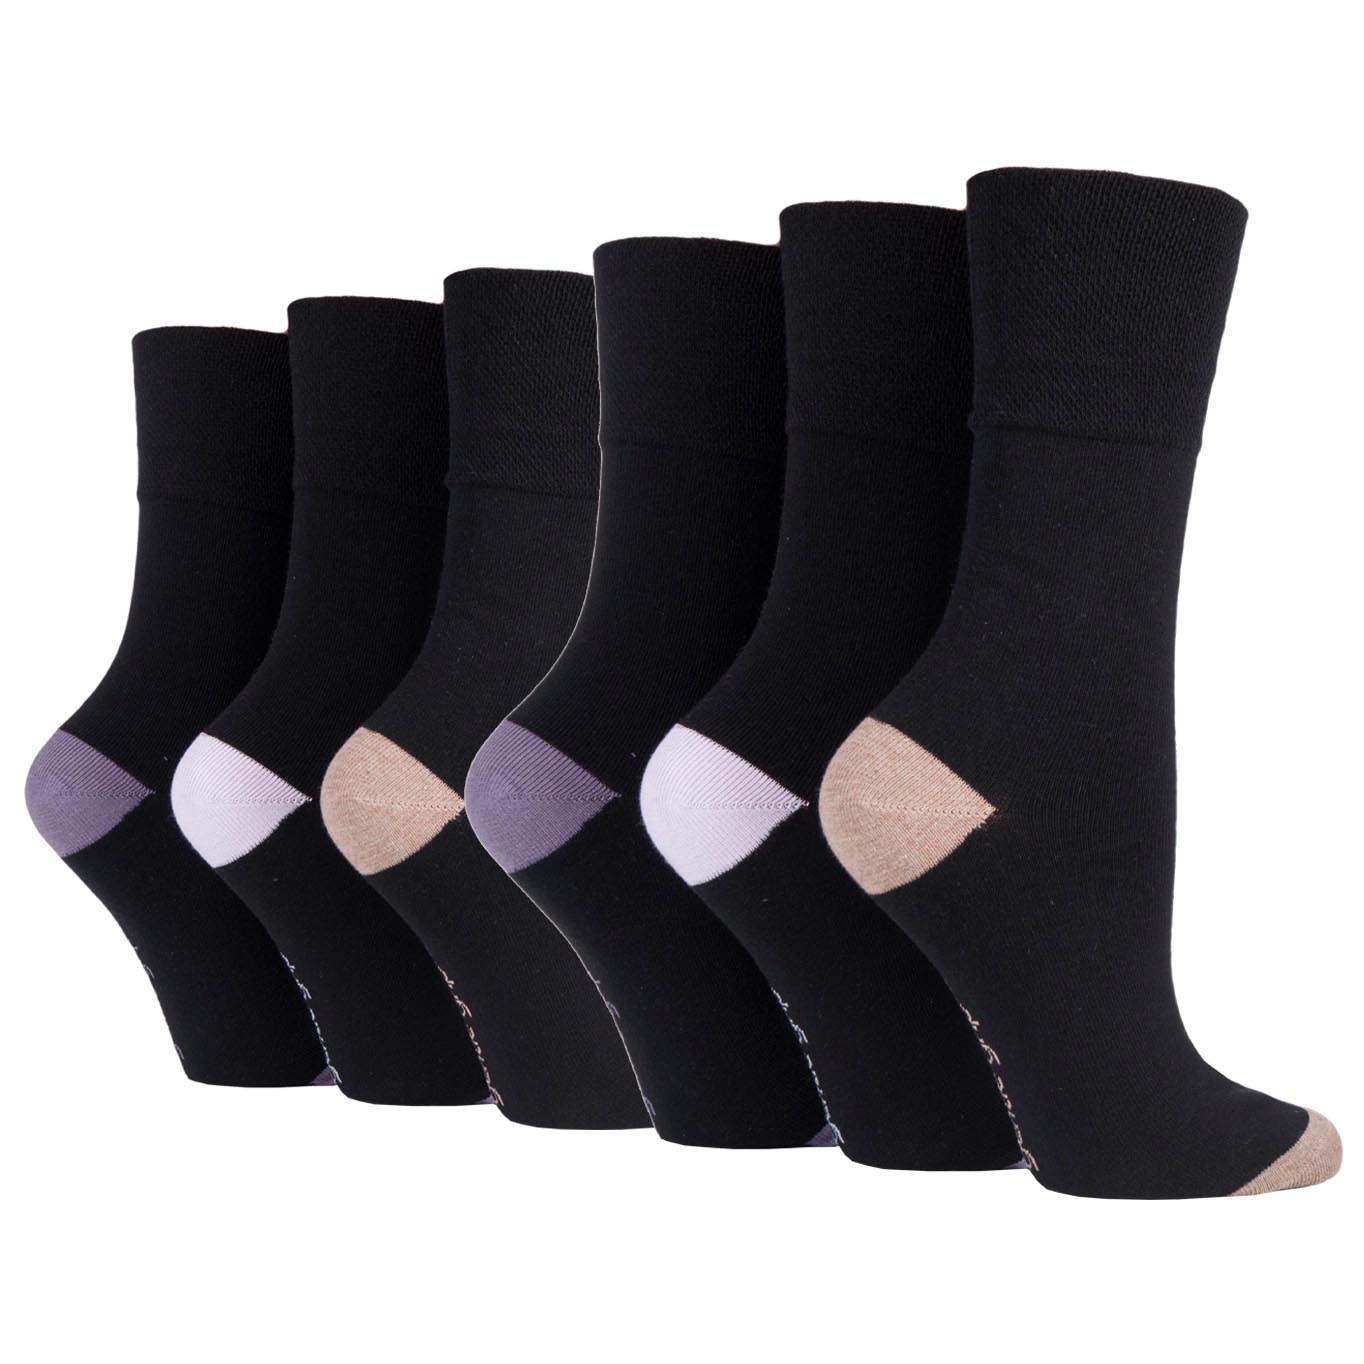 6 Pairs Ladies Gentle Grip Cotton Socks Black with Mauve/Lilac/Mocha Heel & Toe